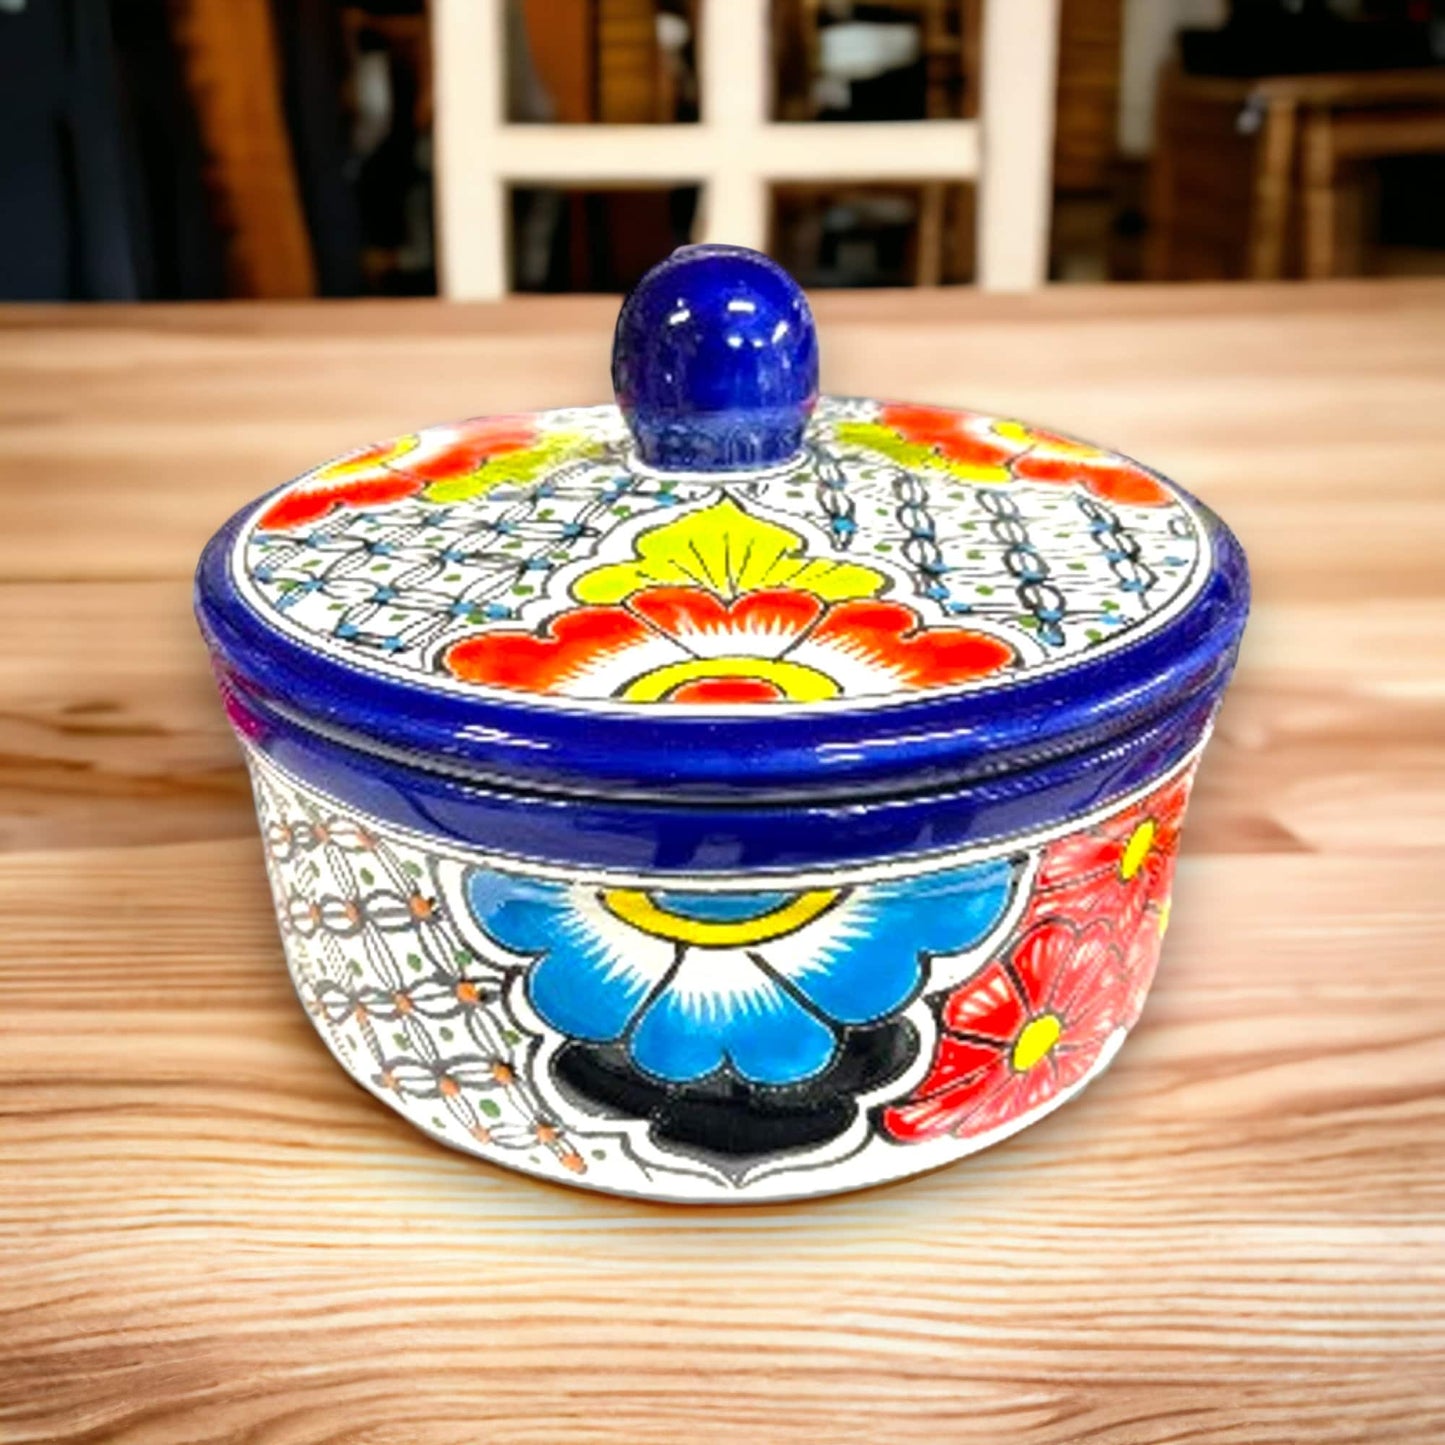 Colorful Talavera Tortilla Warmer | Handcrafted Mexican Pottery from Puebla